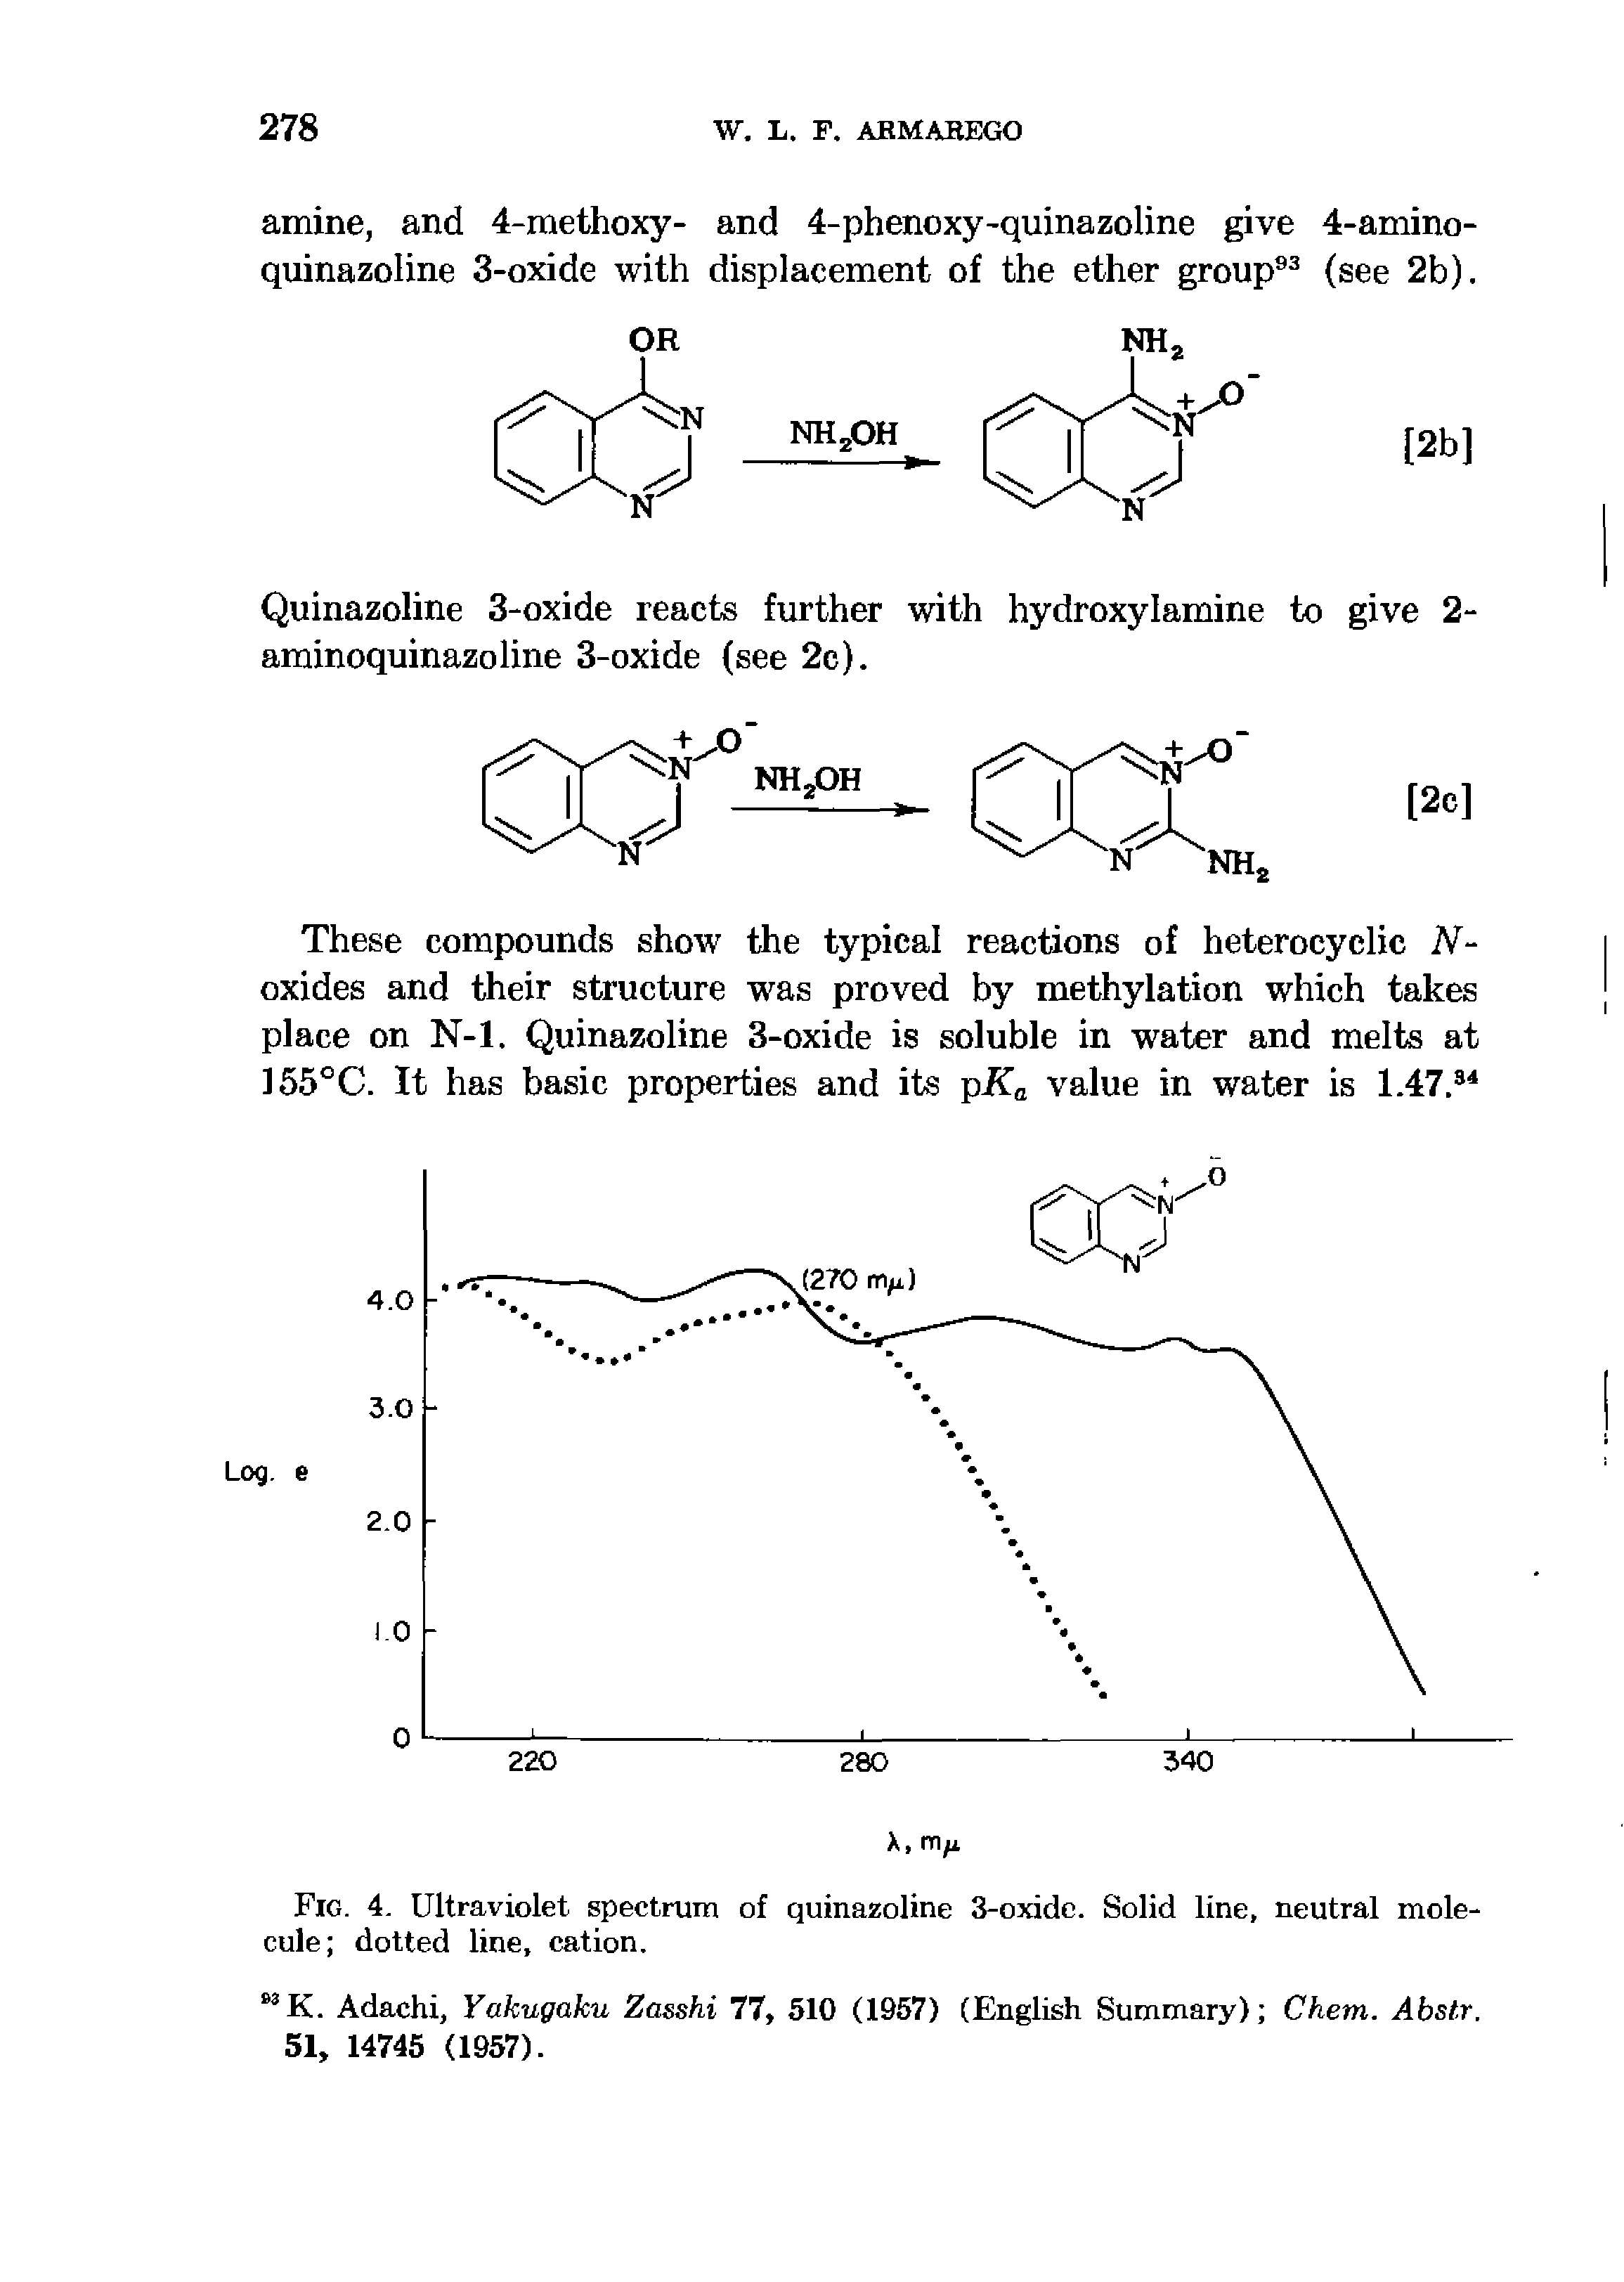 Fig. 4. Ultraviolet spectrum of quinazoline 3-oxidc. Solid line, neutral molecule dotted line, cation,...